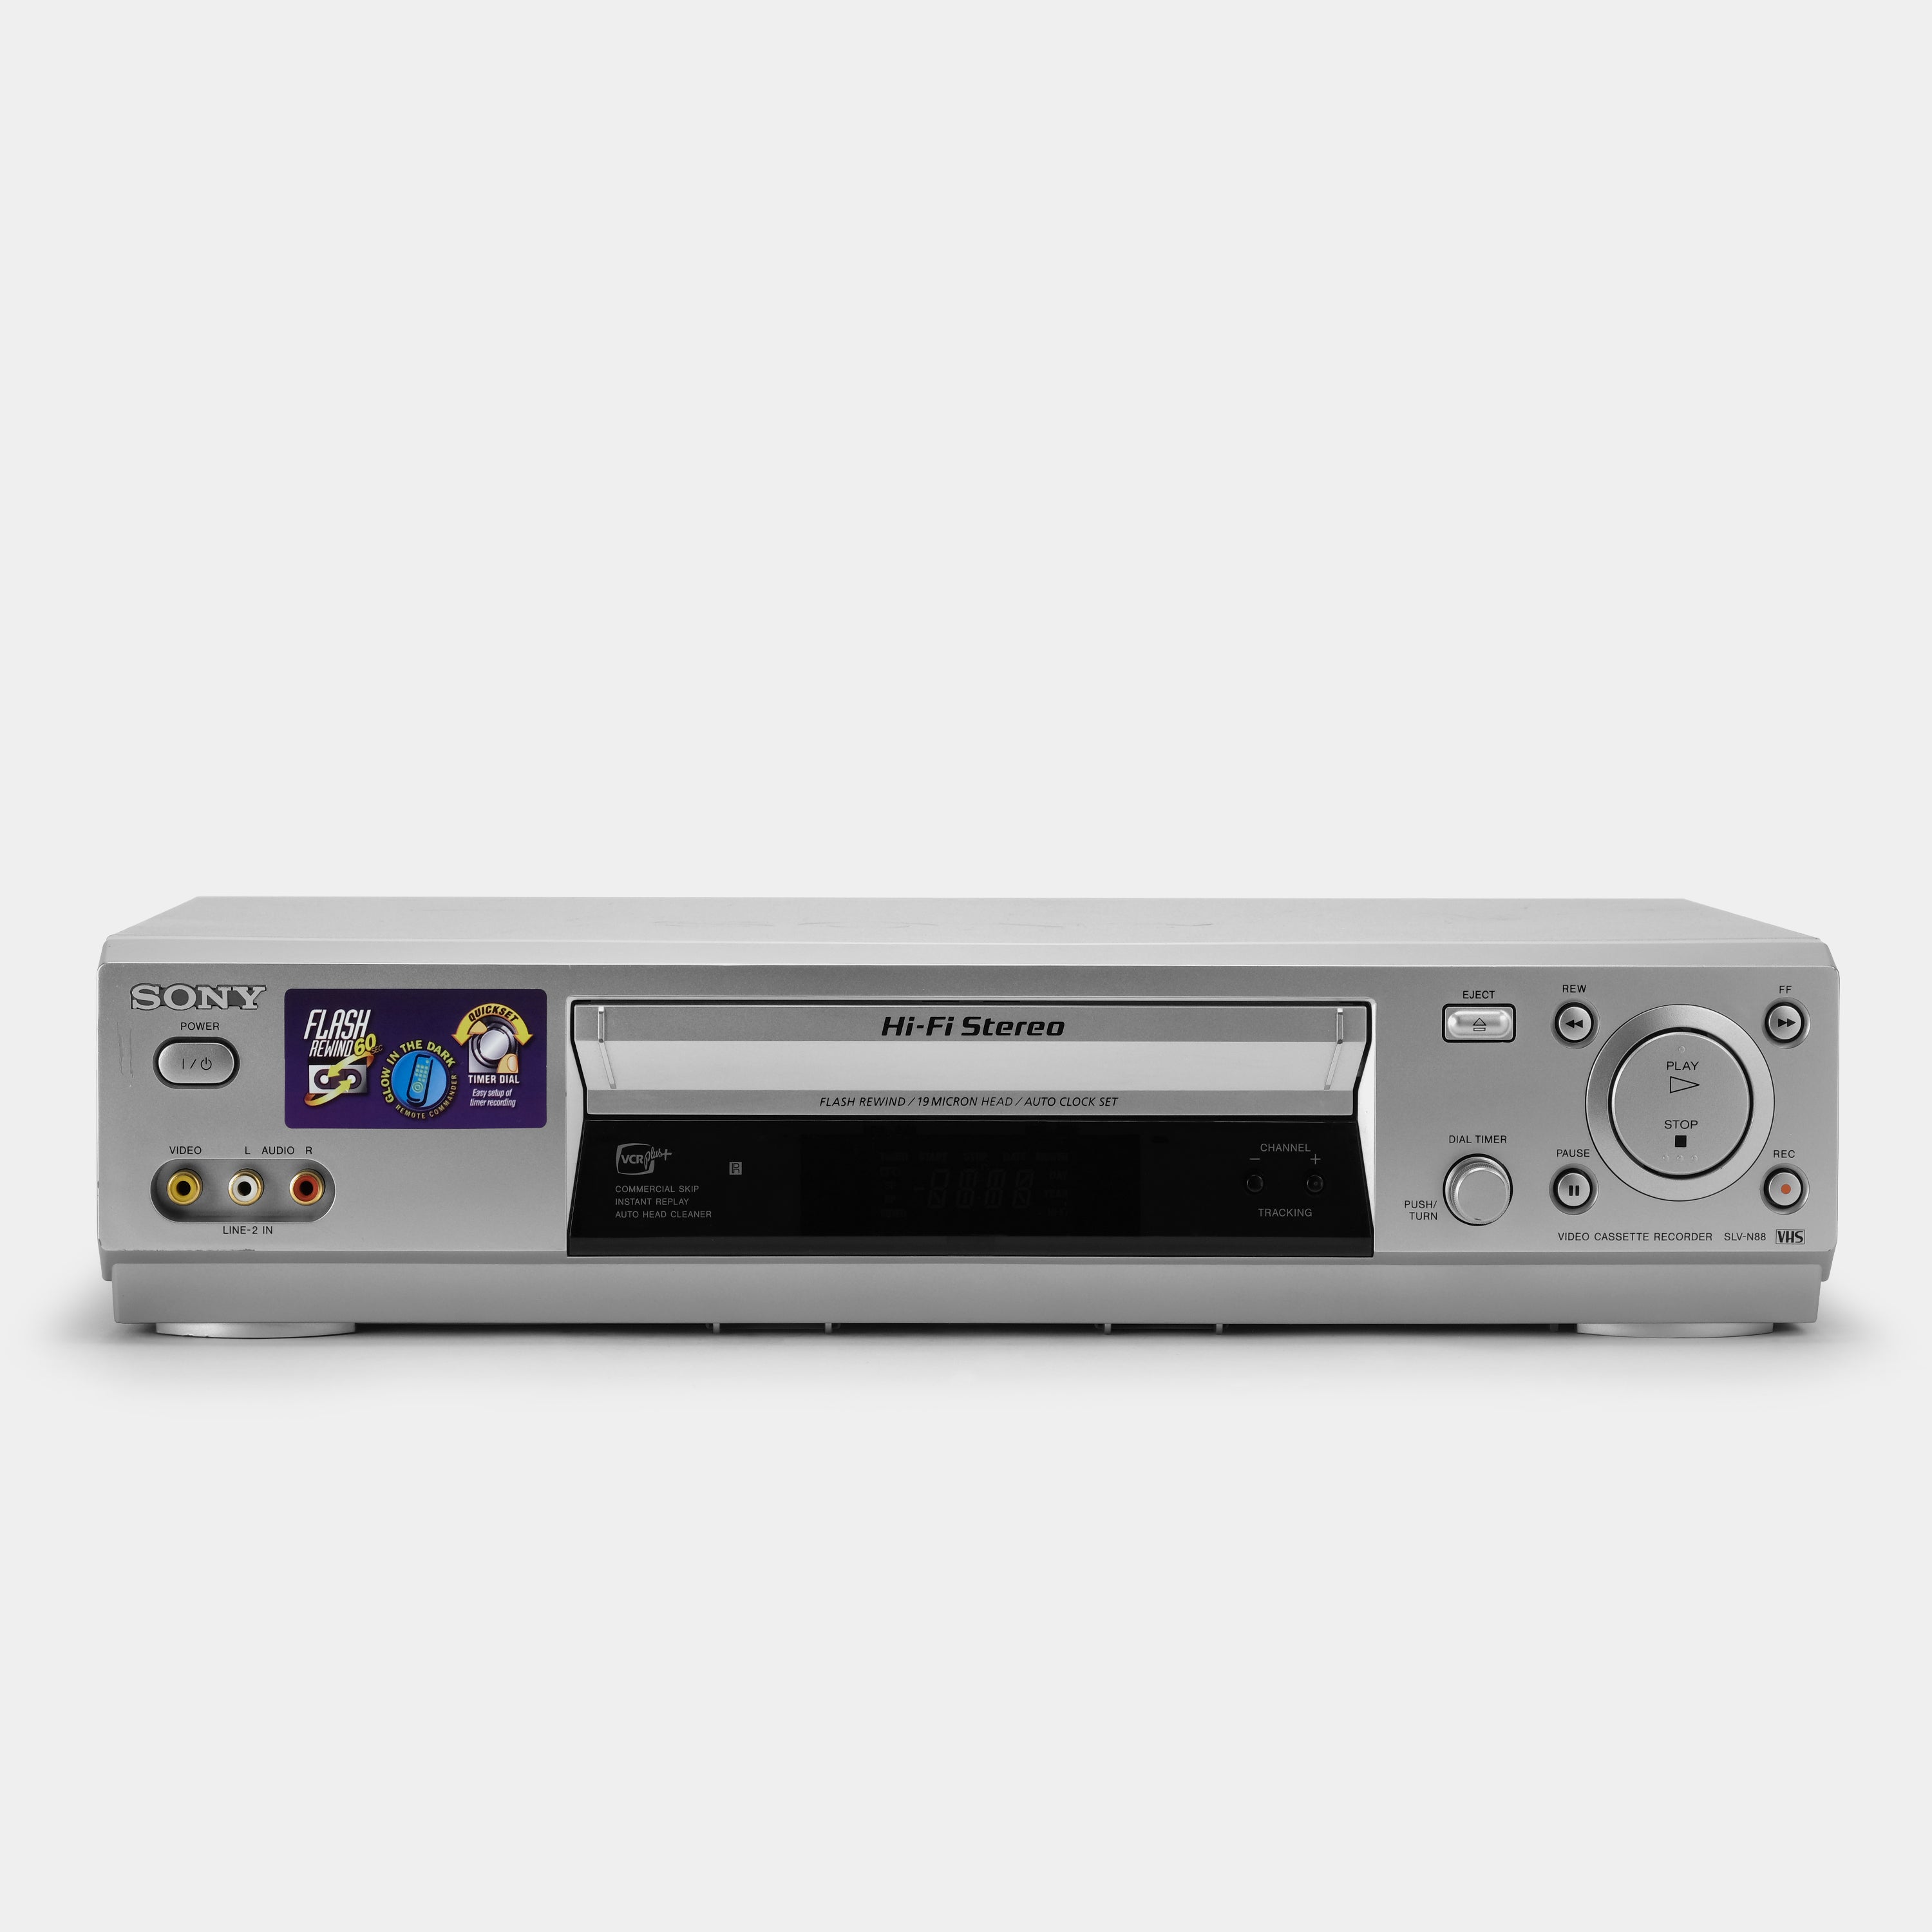 Sony SLV-N88 VCR VHS Player